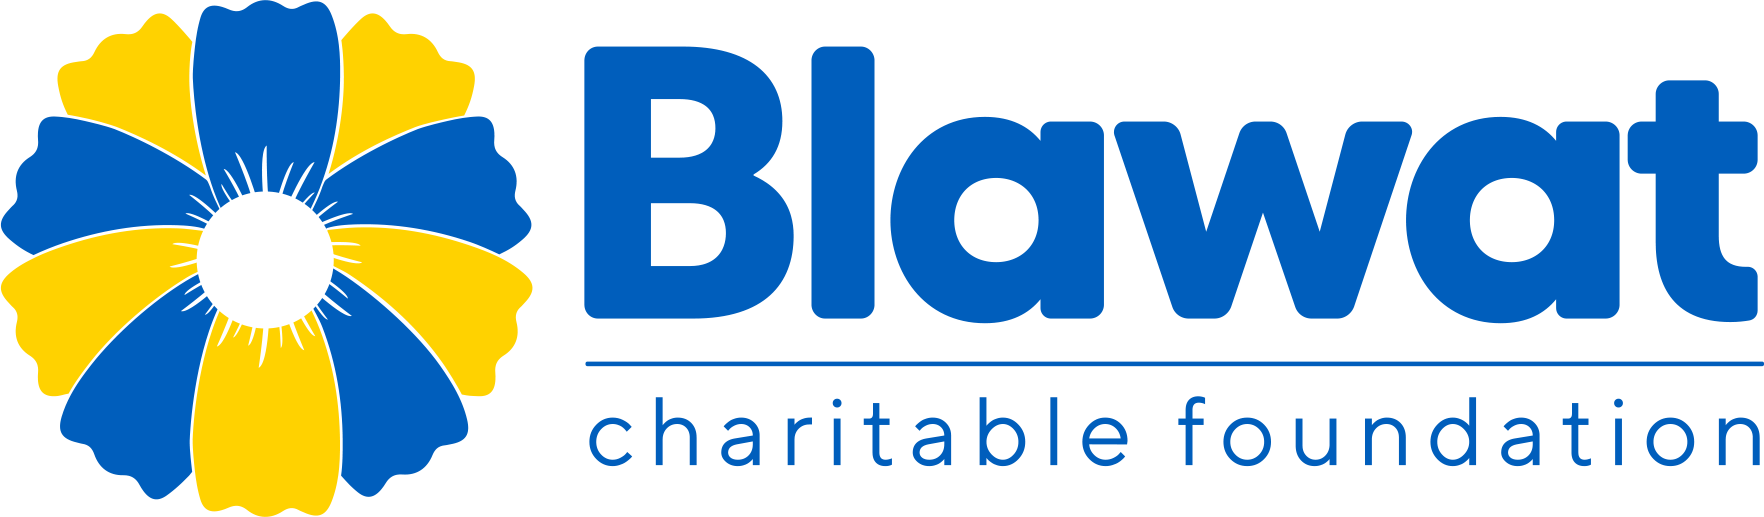 Blawat - charitable foundation